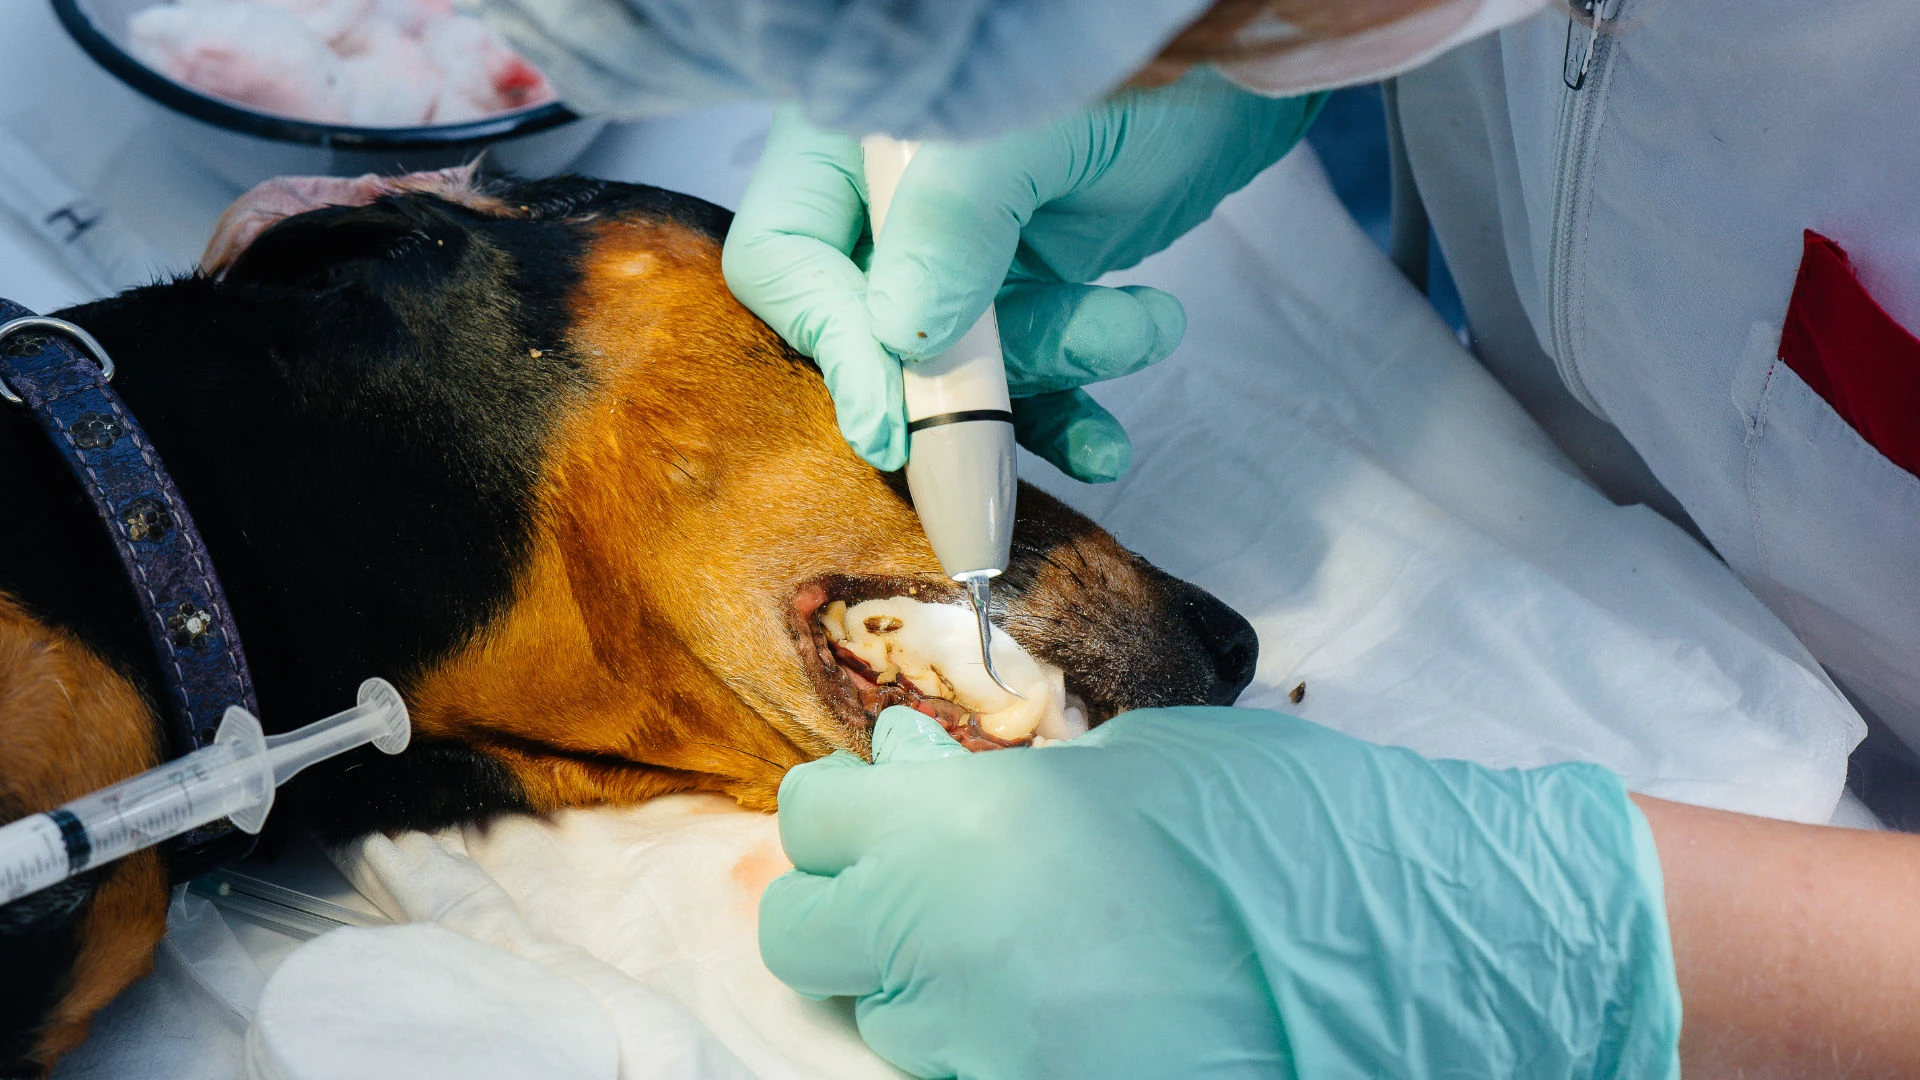 A large dog undergoing dental surgery under anaesthetic.